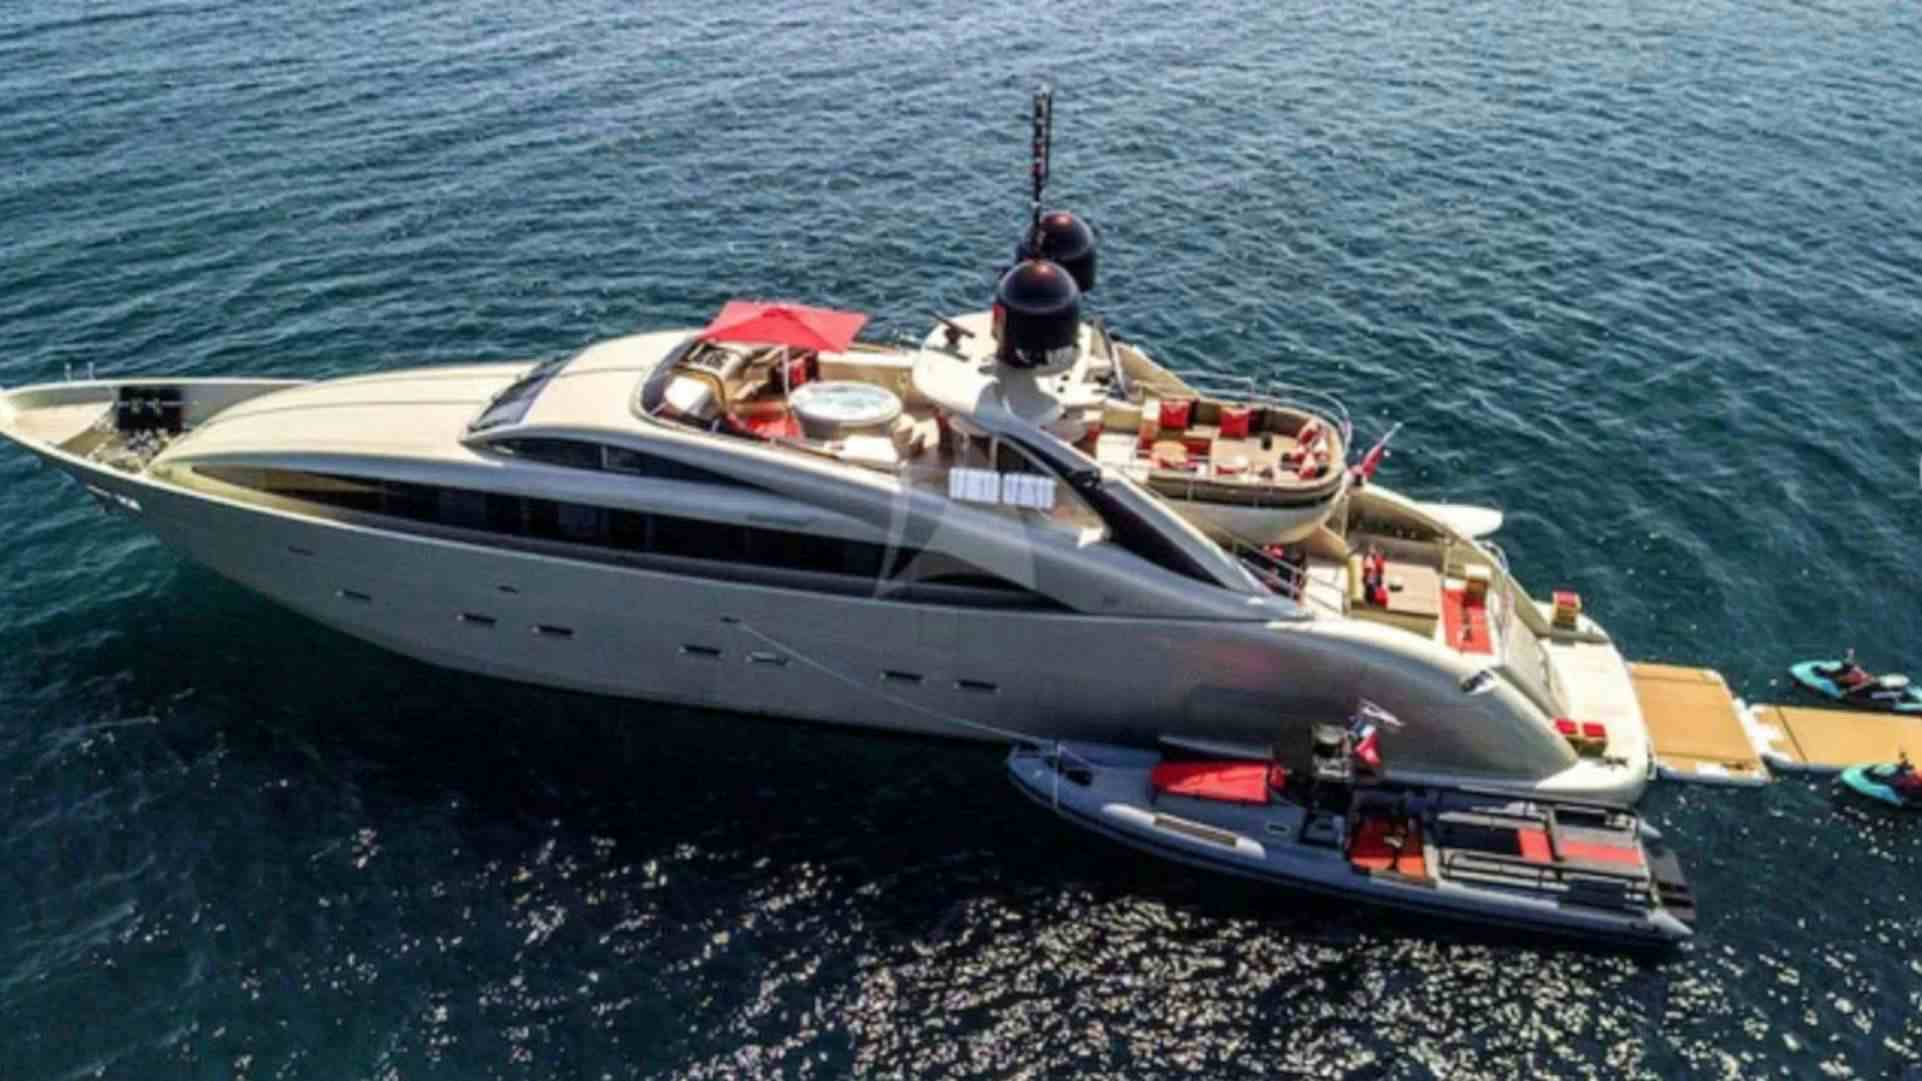 YCM 120 - Yacht Charter Pontevedra & Boat hire in Riviera, Corsica, Sardinia, Spain, Balearics, Caribbean 1